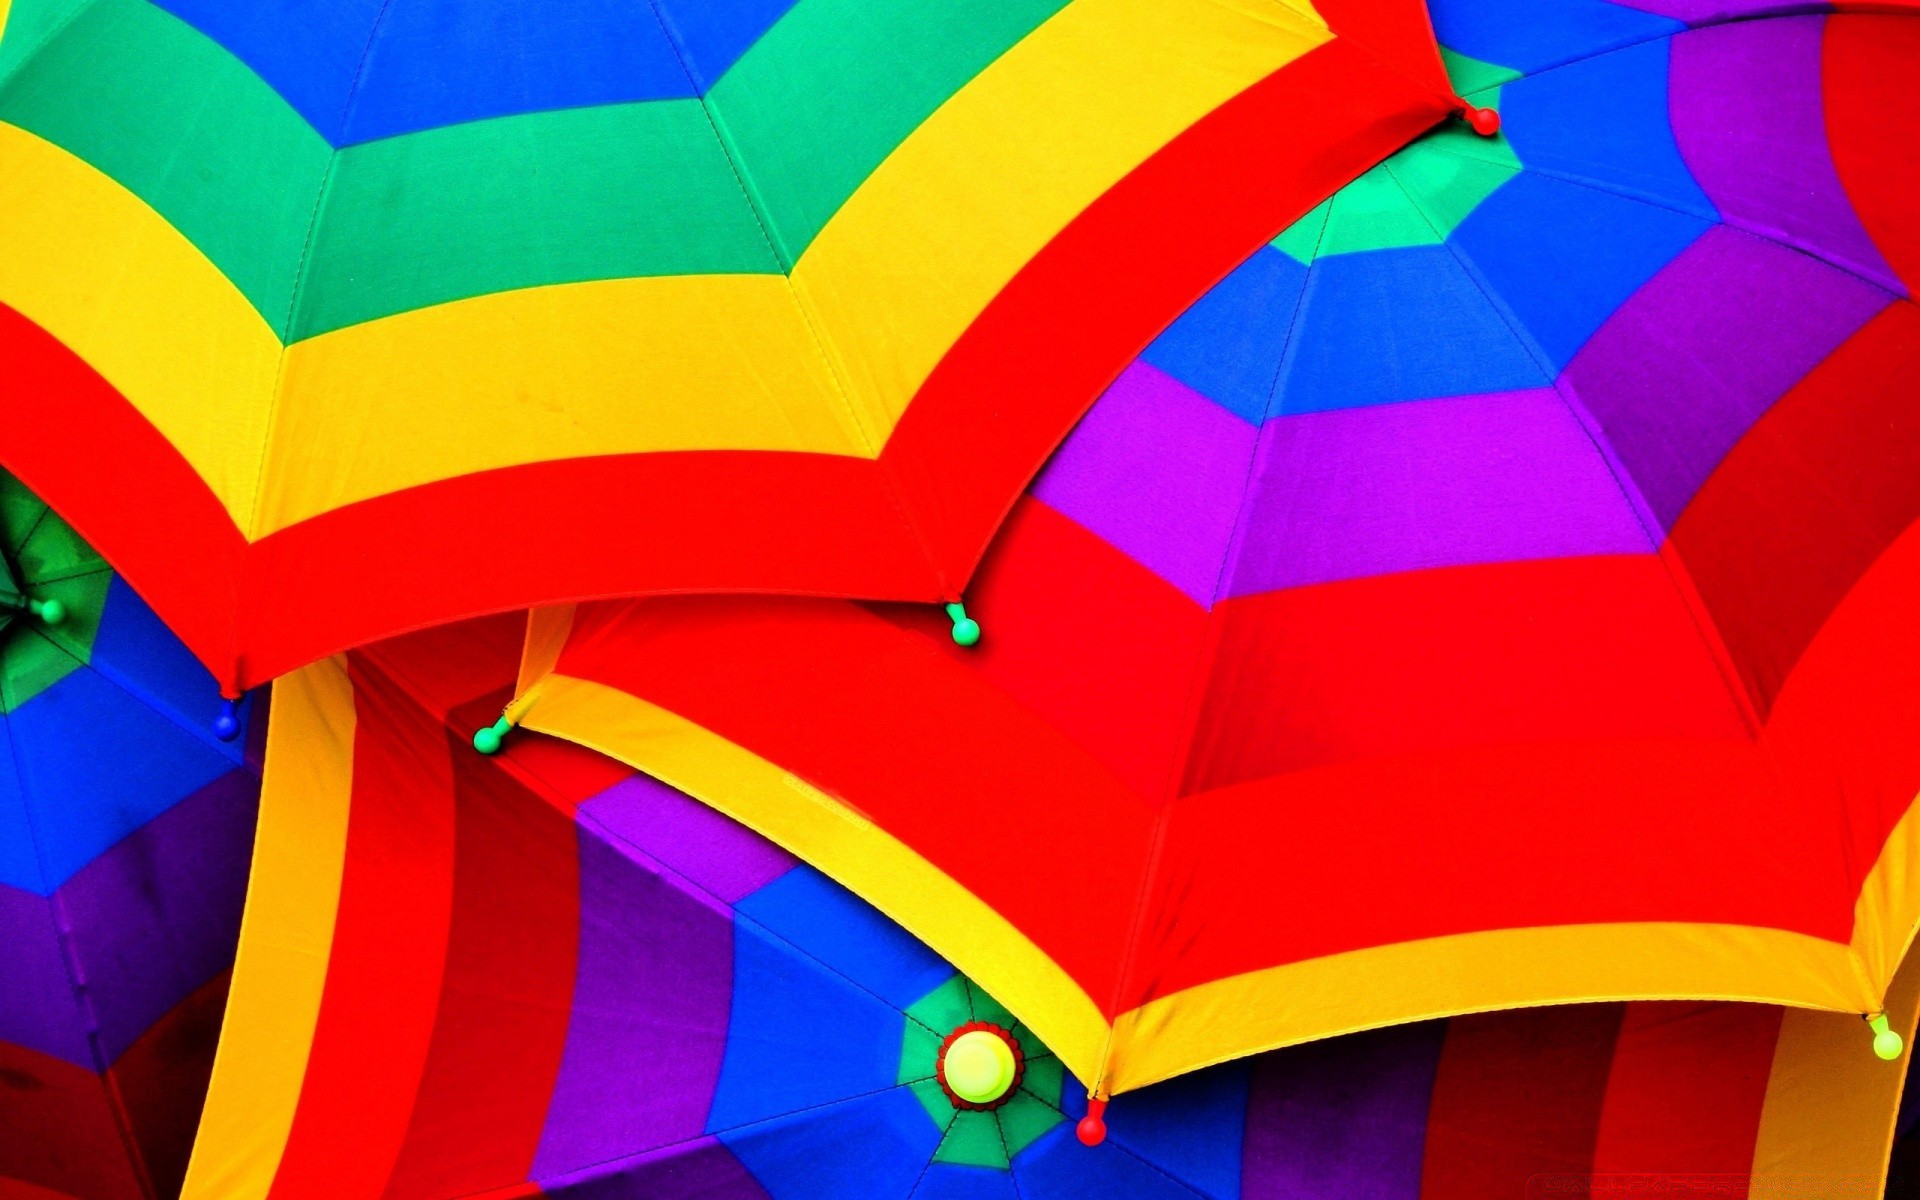 bright colors motley rainbow color bright design art illustration graphic design shape abstract decoration fun pattern creativity geometric